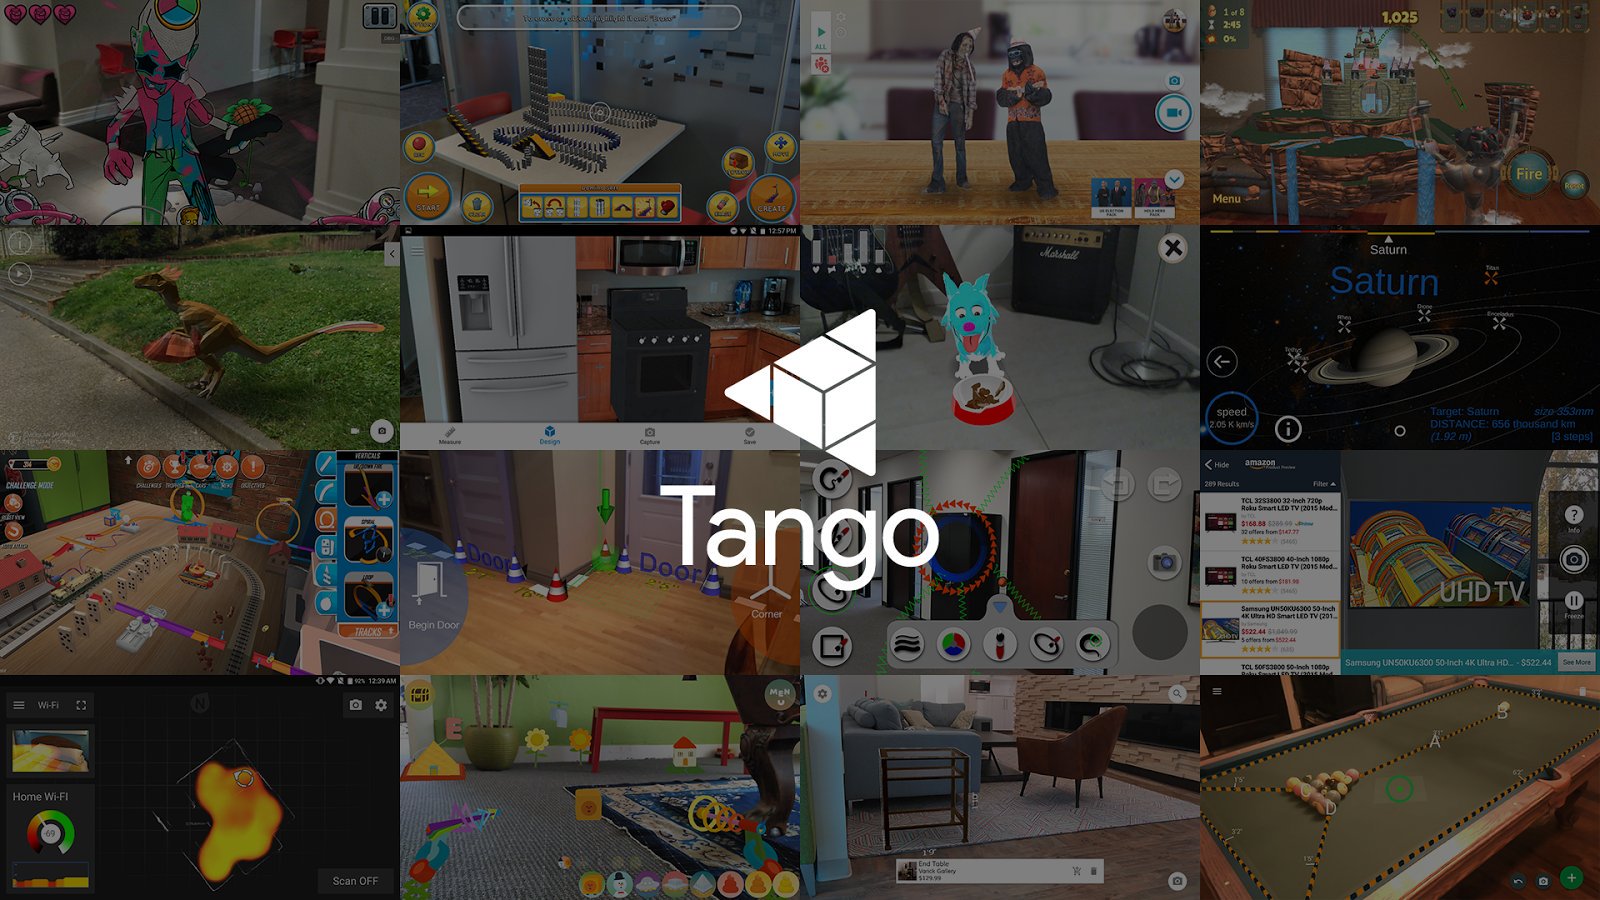 Google kills its Tango augmented reality platform, shifting focus to ARCore